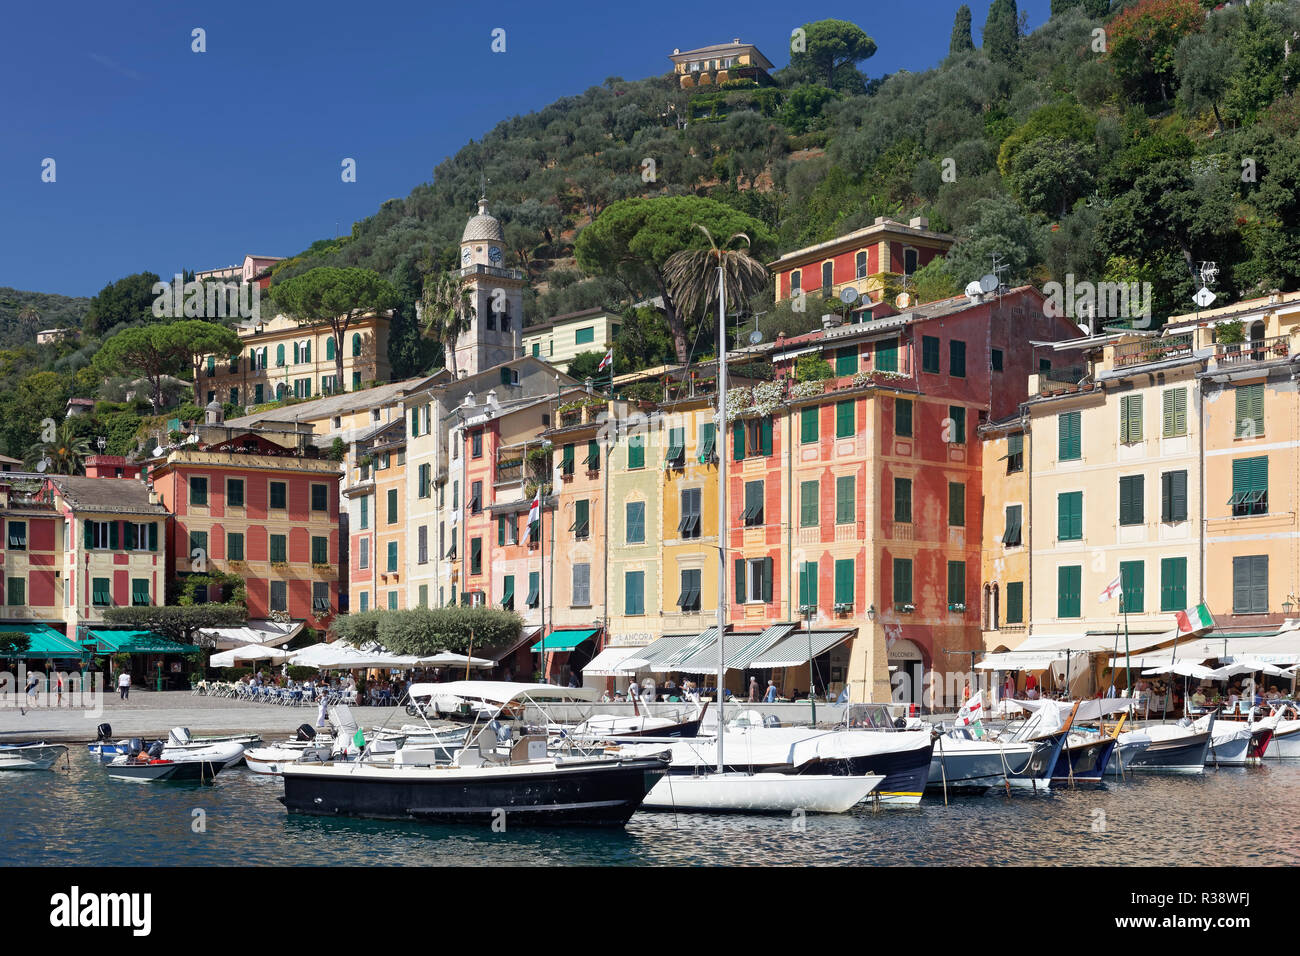 Villa y Puerto, Portofino, Golfo Paradiso, Provincia de Génova, Riviera di Levante, Liguria, Italia Foto de stock